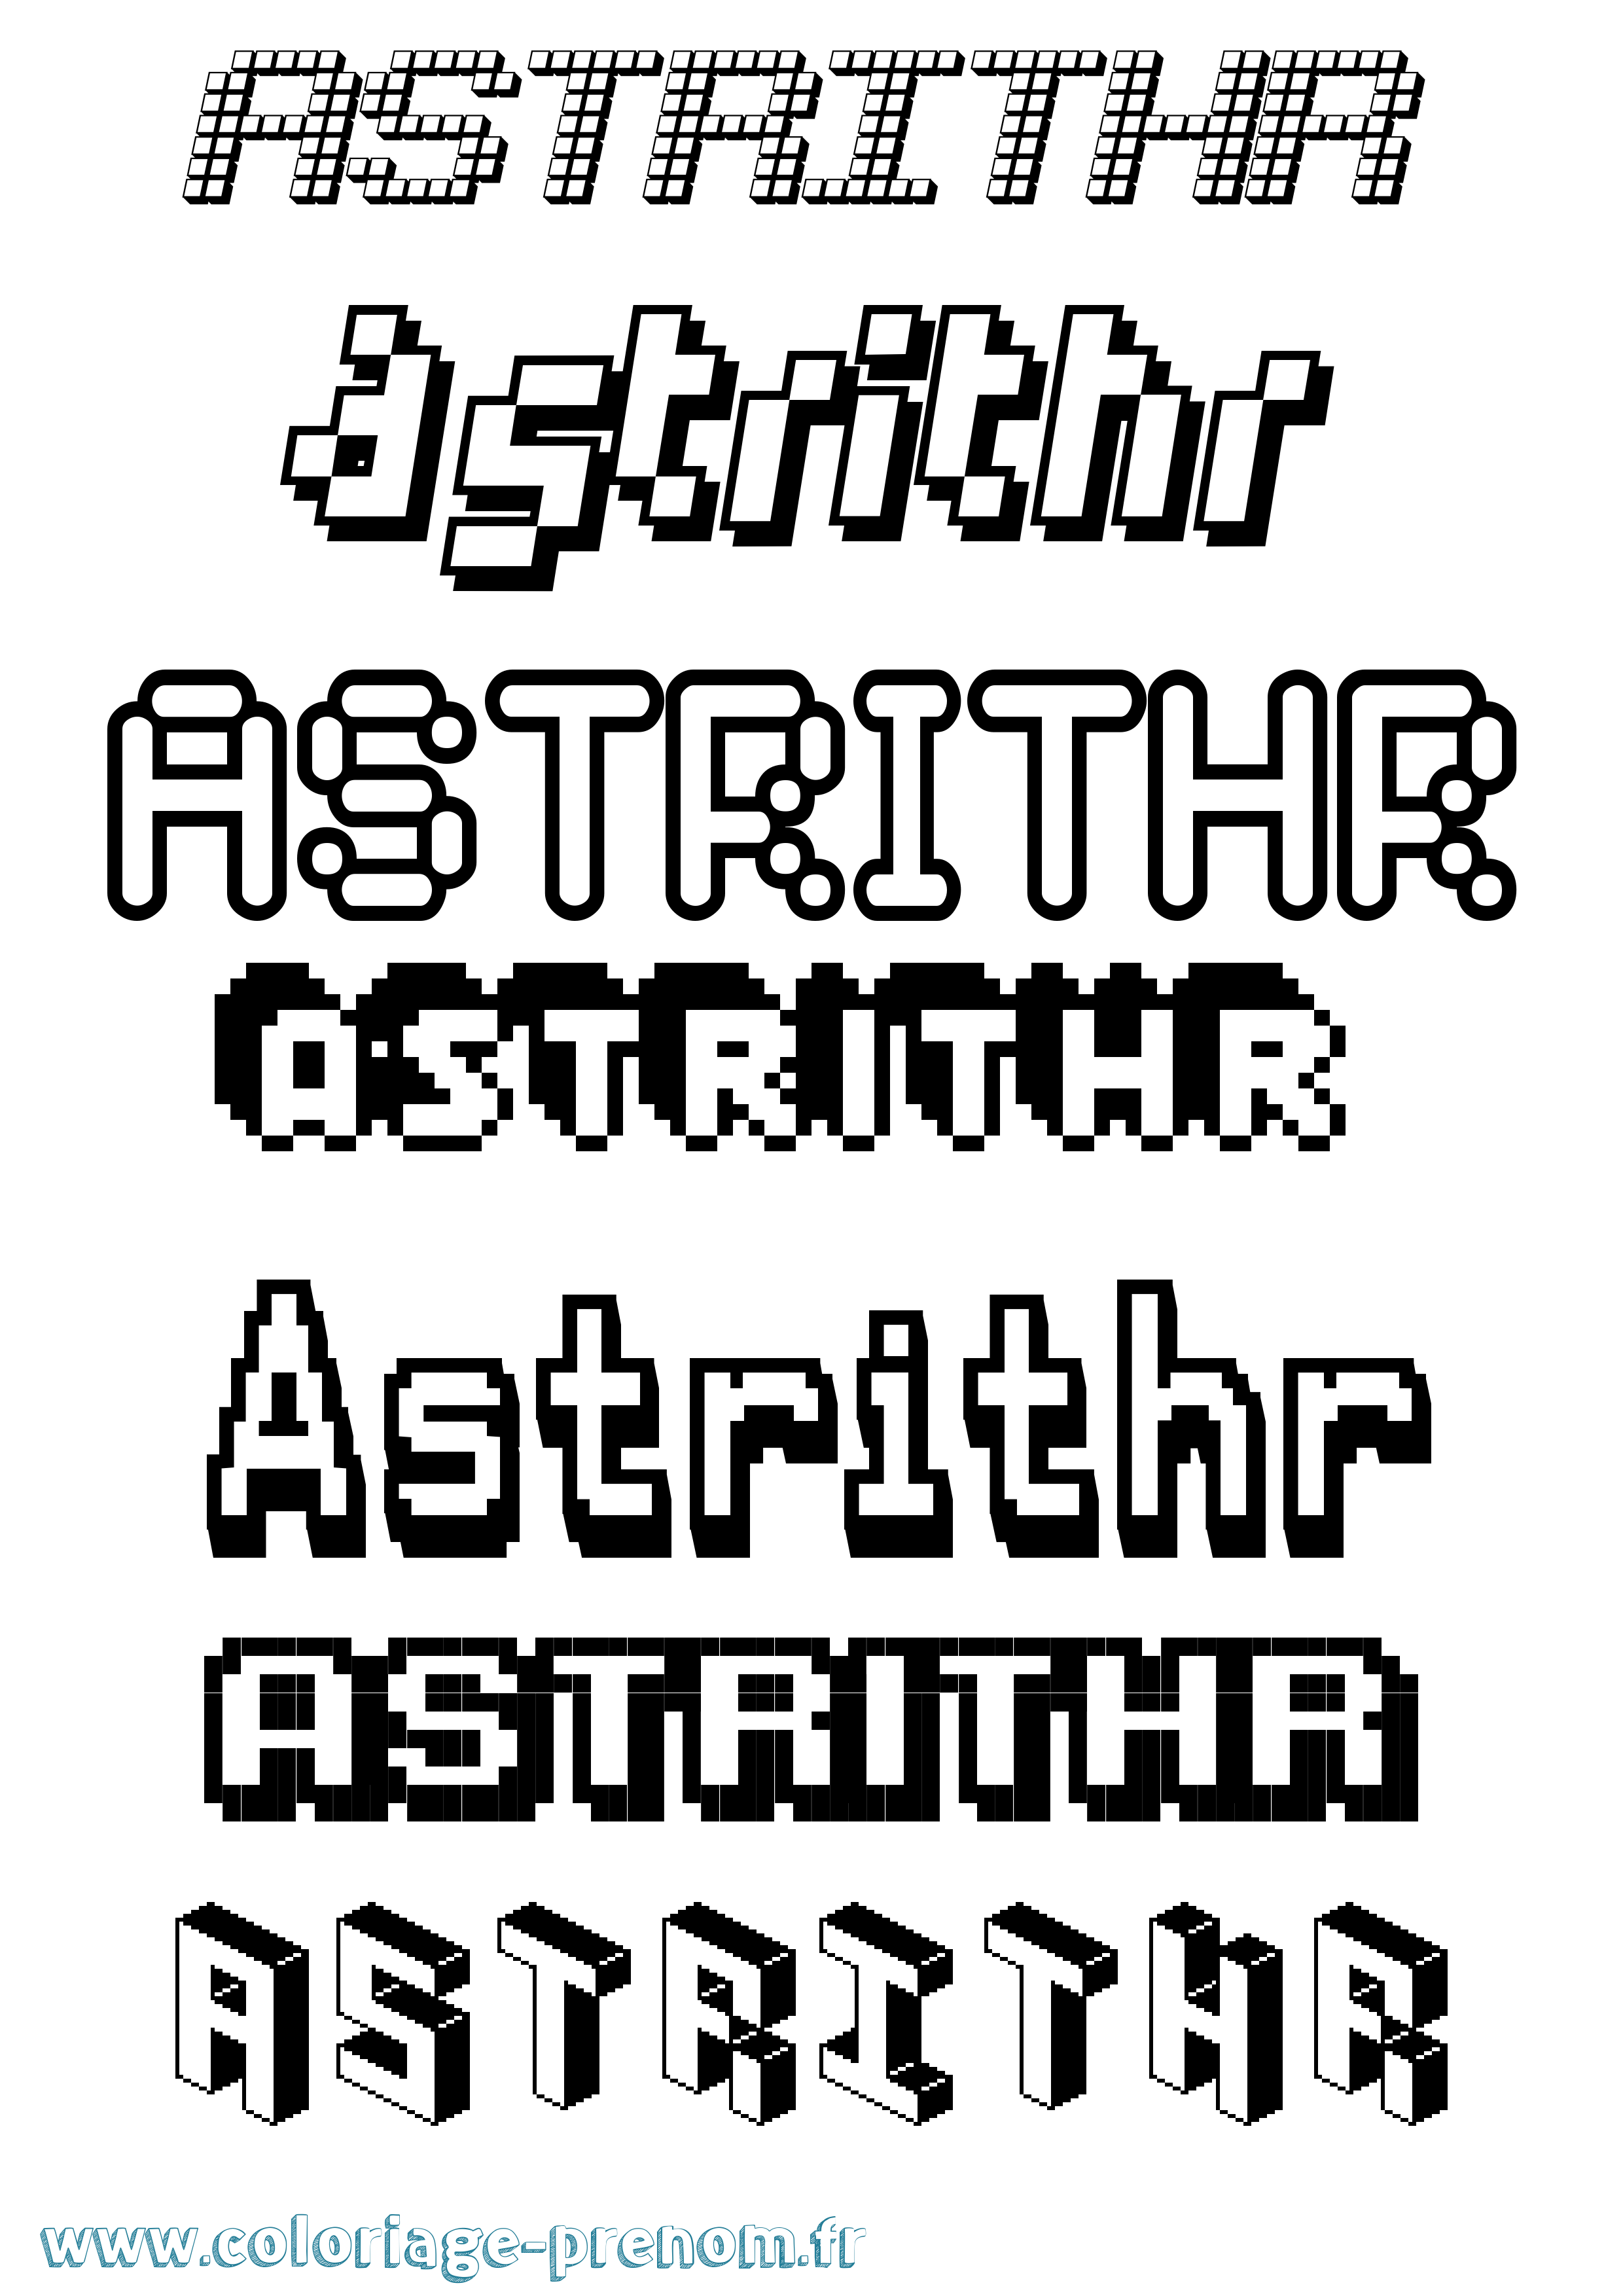 Coloriage prénom Astrithr Pixel